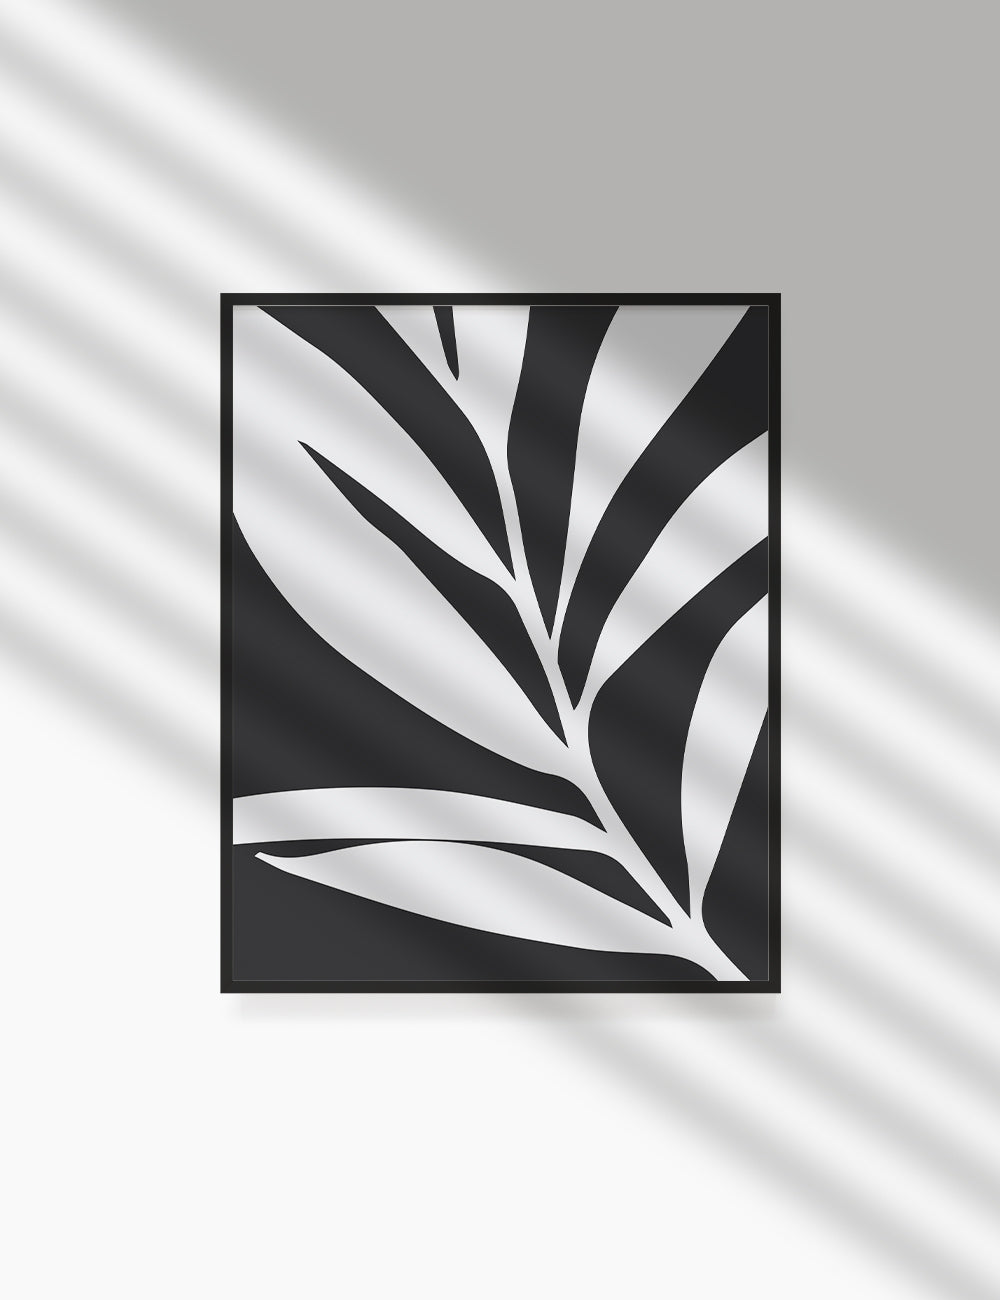 LEAF. MINIMALIST BOTANICAL BOHO ART. BLACK AND WHITE. Minimal Aesthetic. Clean Design. Printable Wall Art Illustration. - PAPER MOON Art & Design